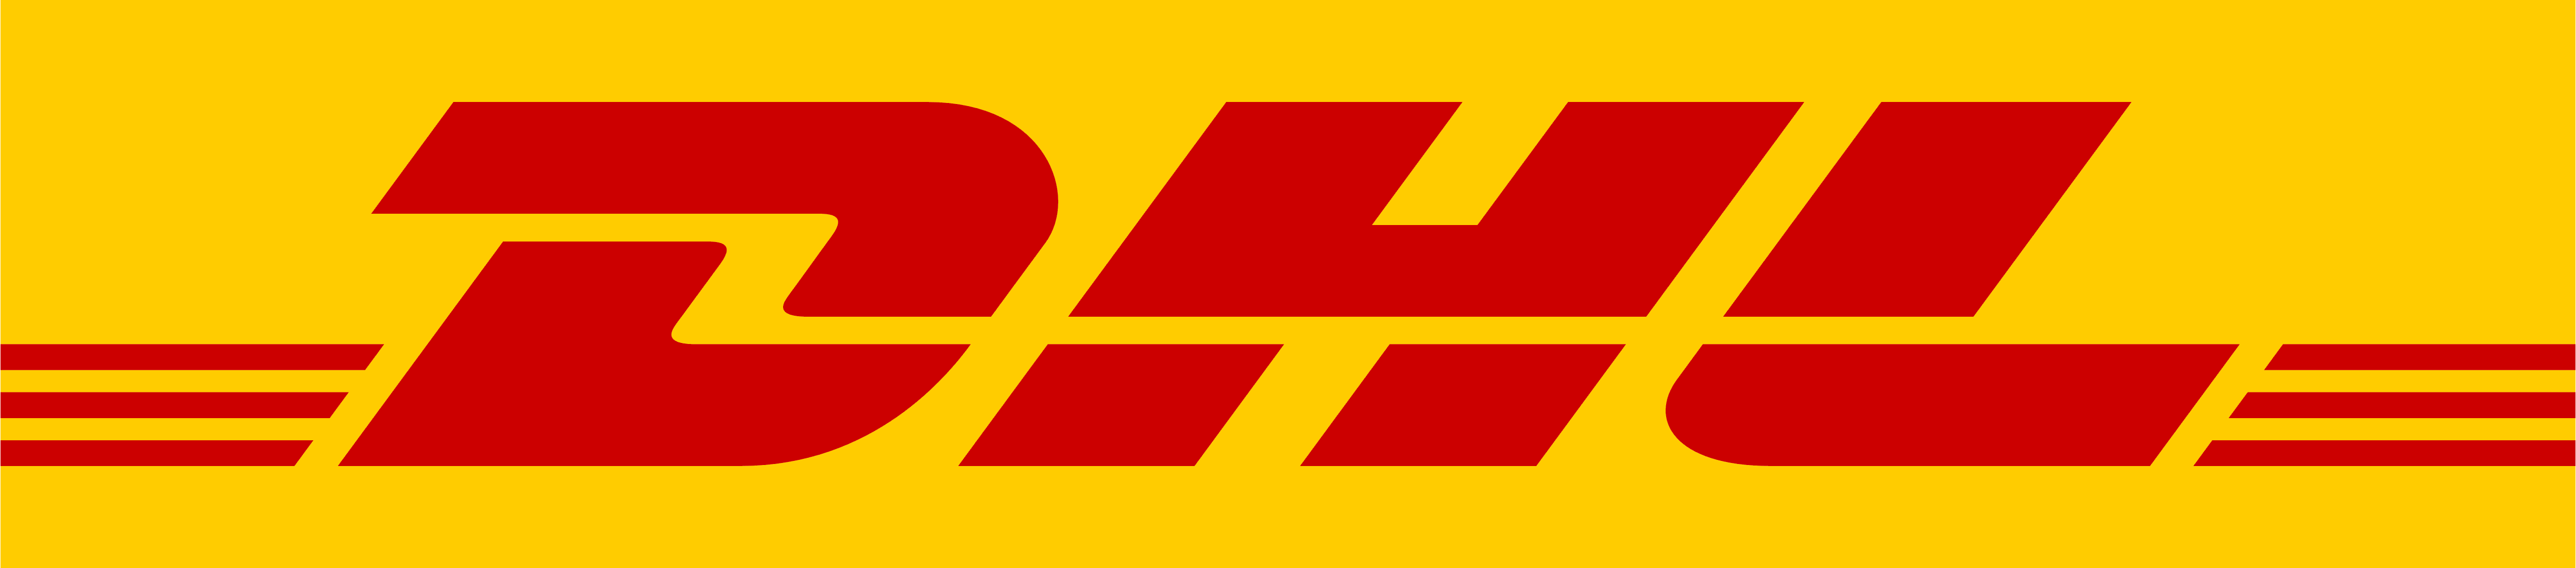 DHL footer logo